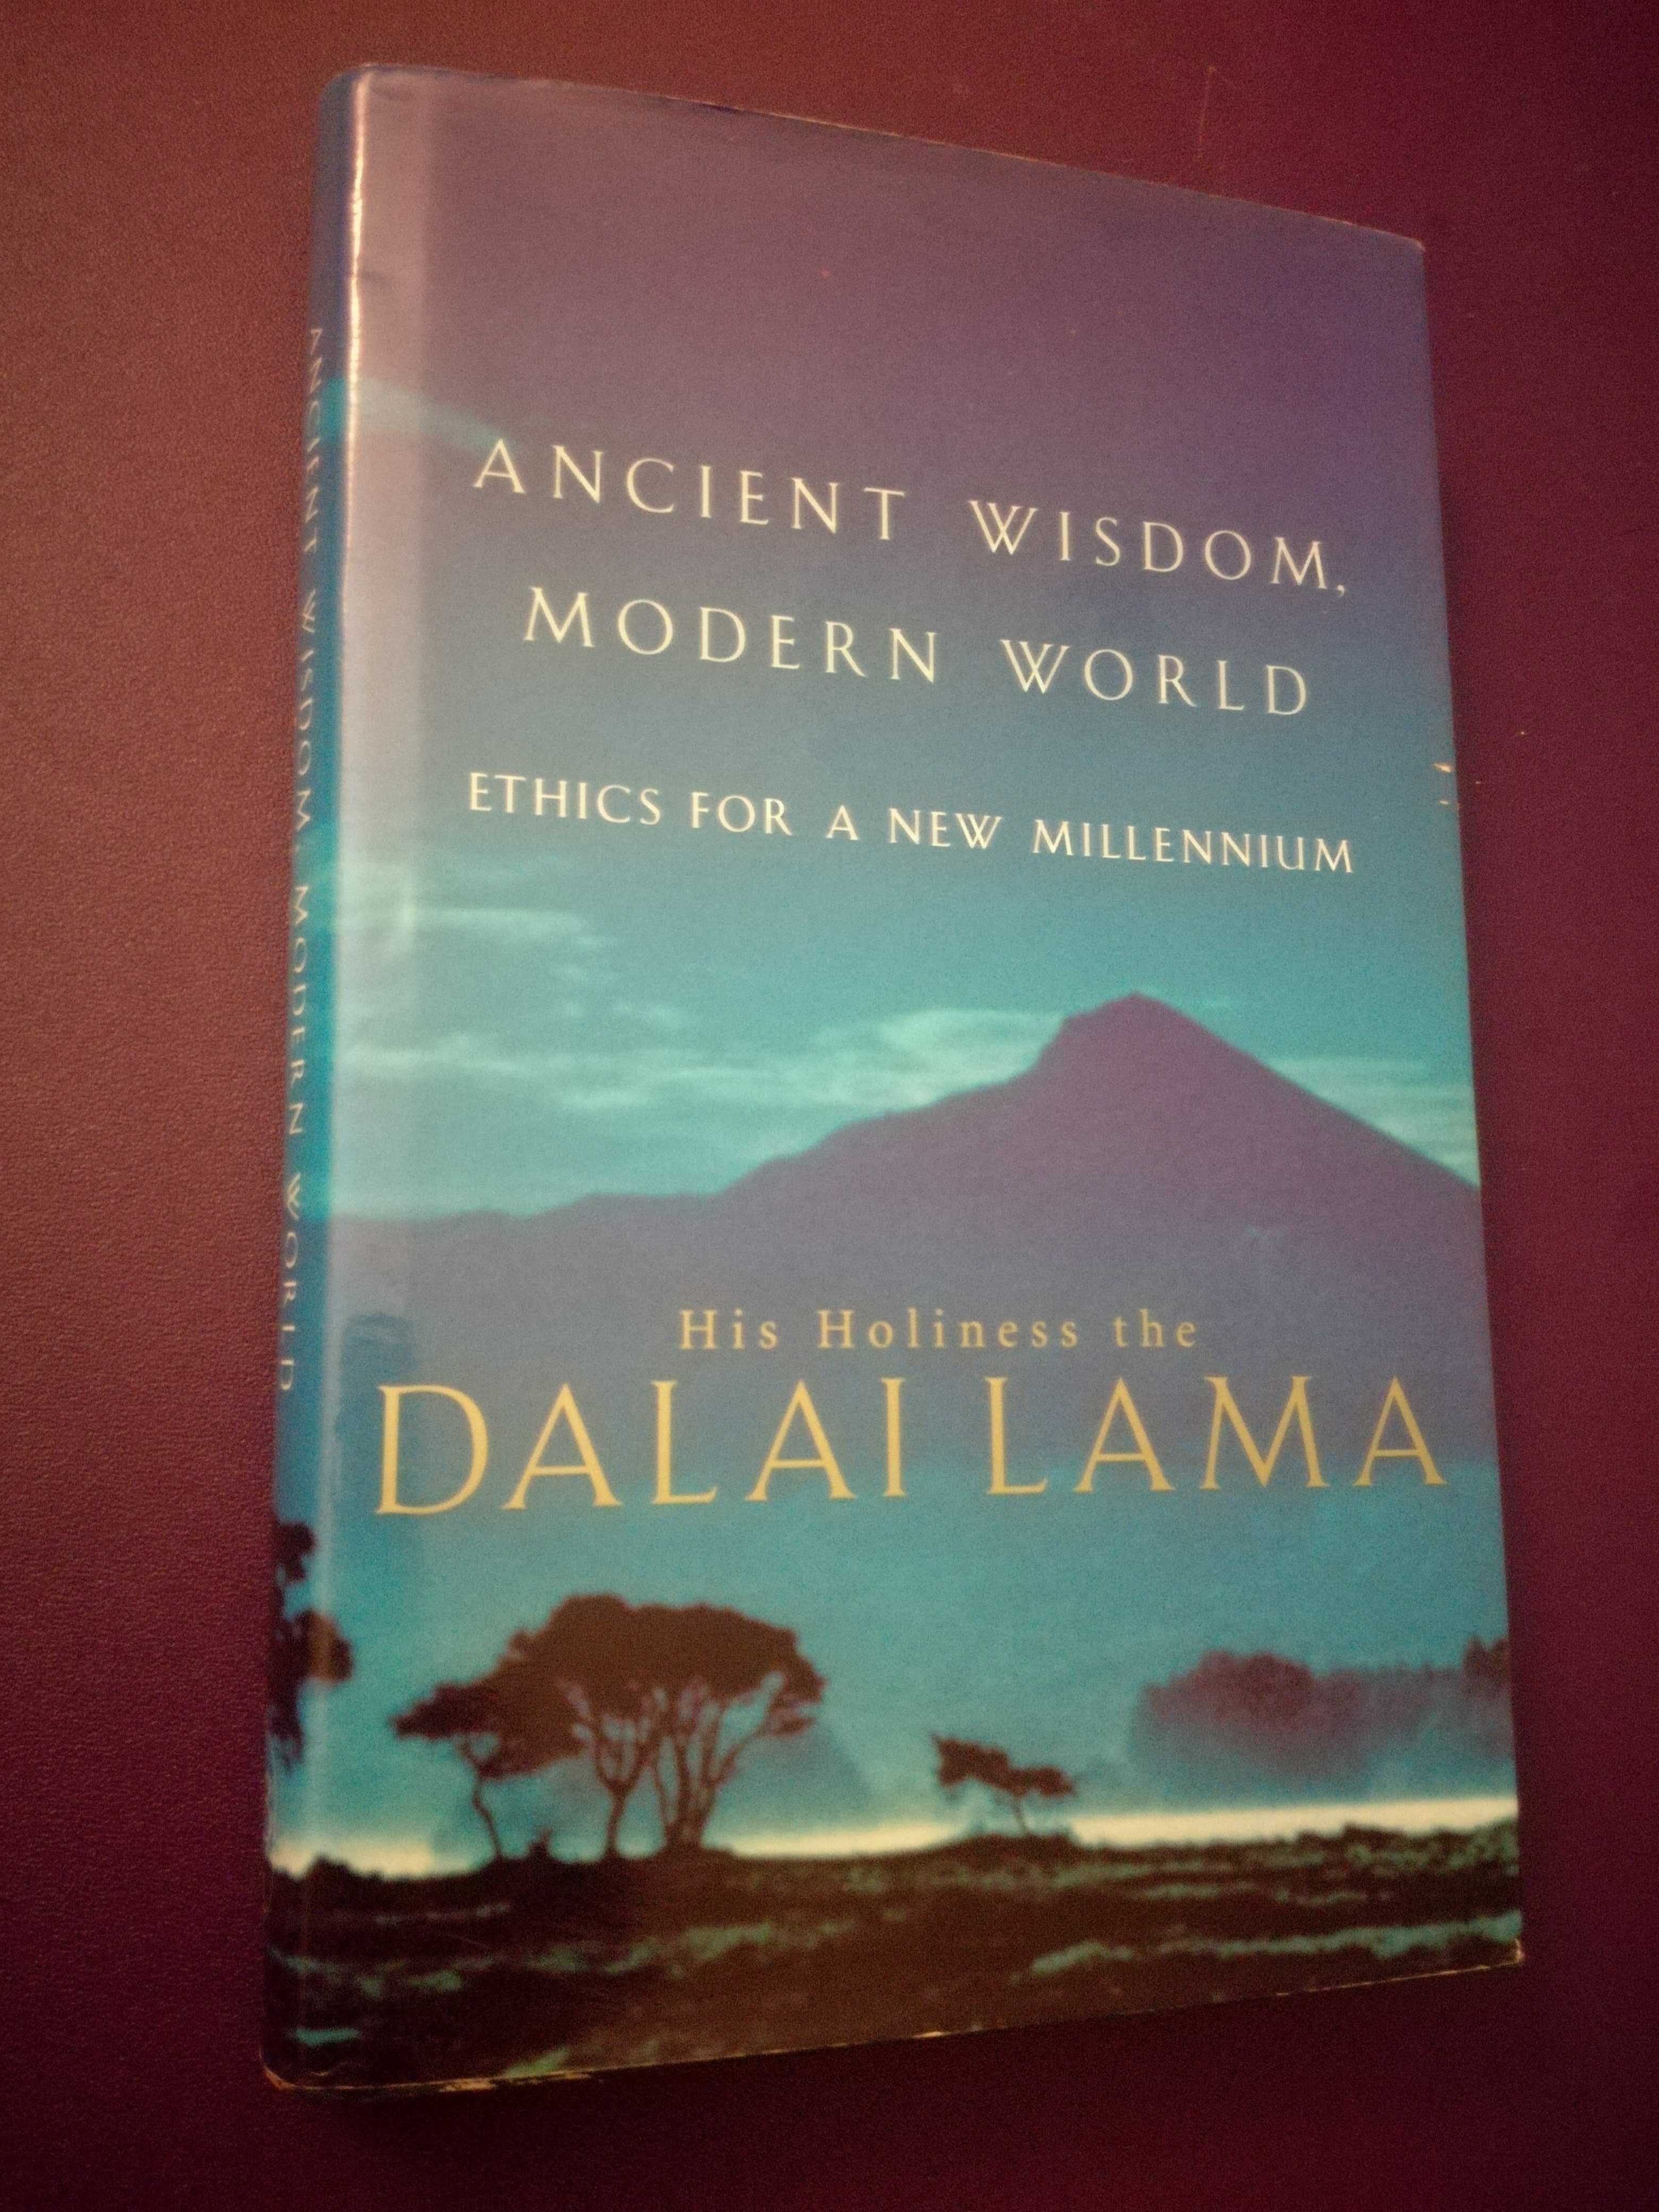 Livro Ancient Wisdom Modern World Dalai Lama